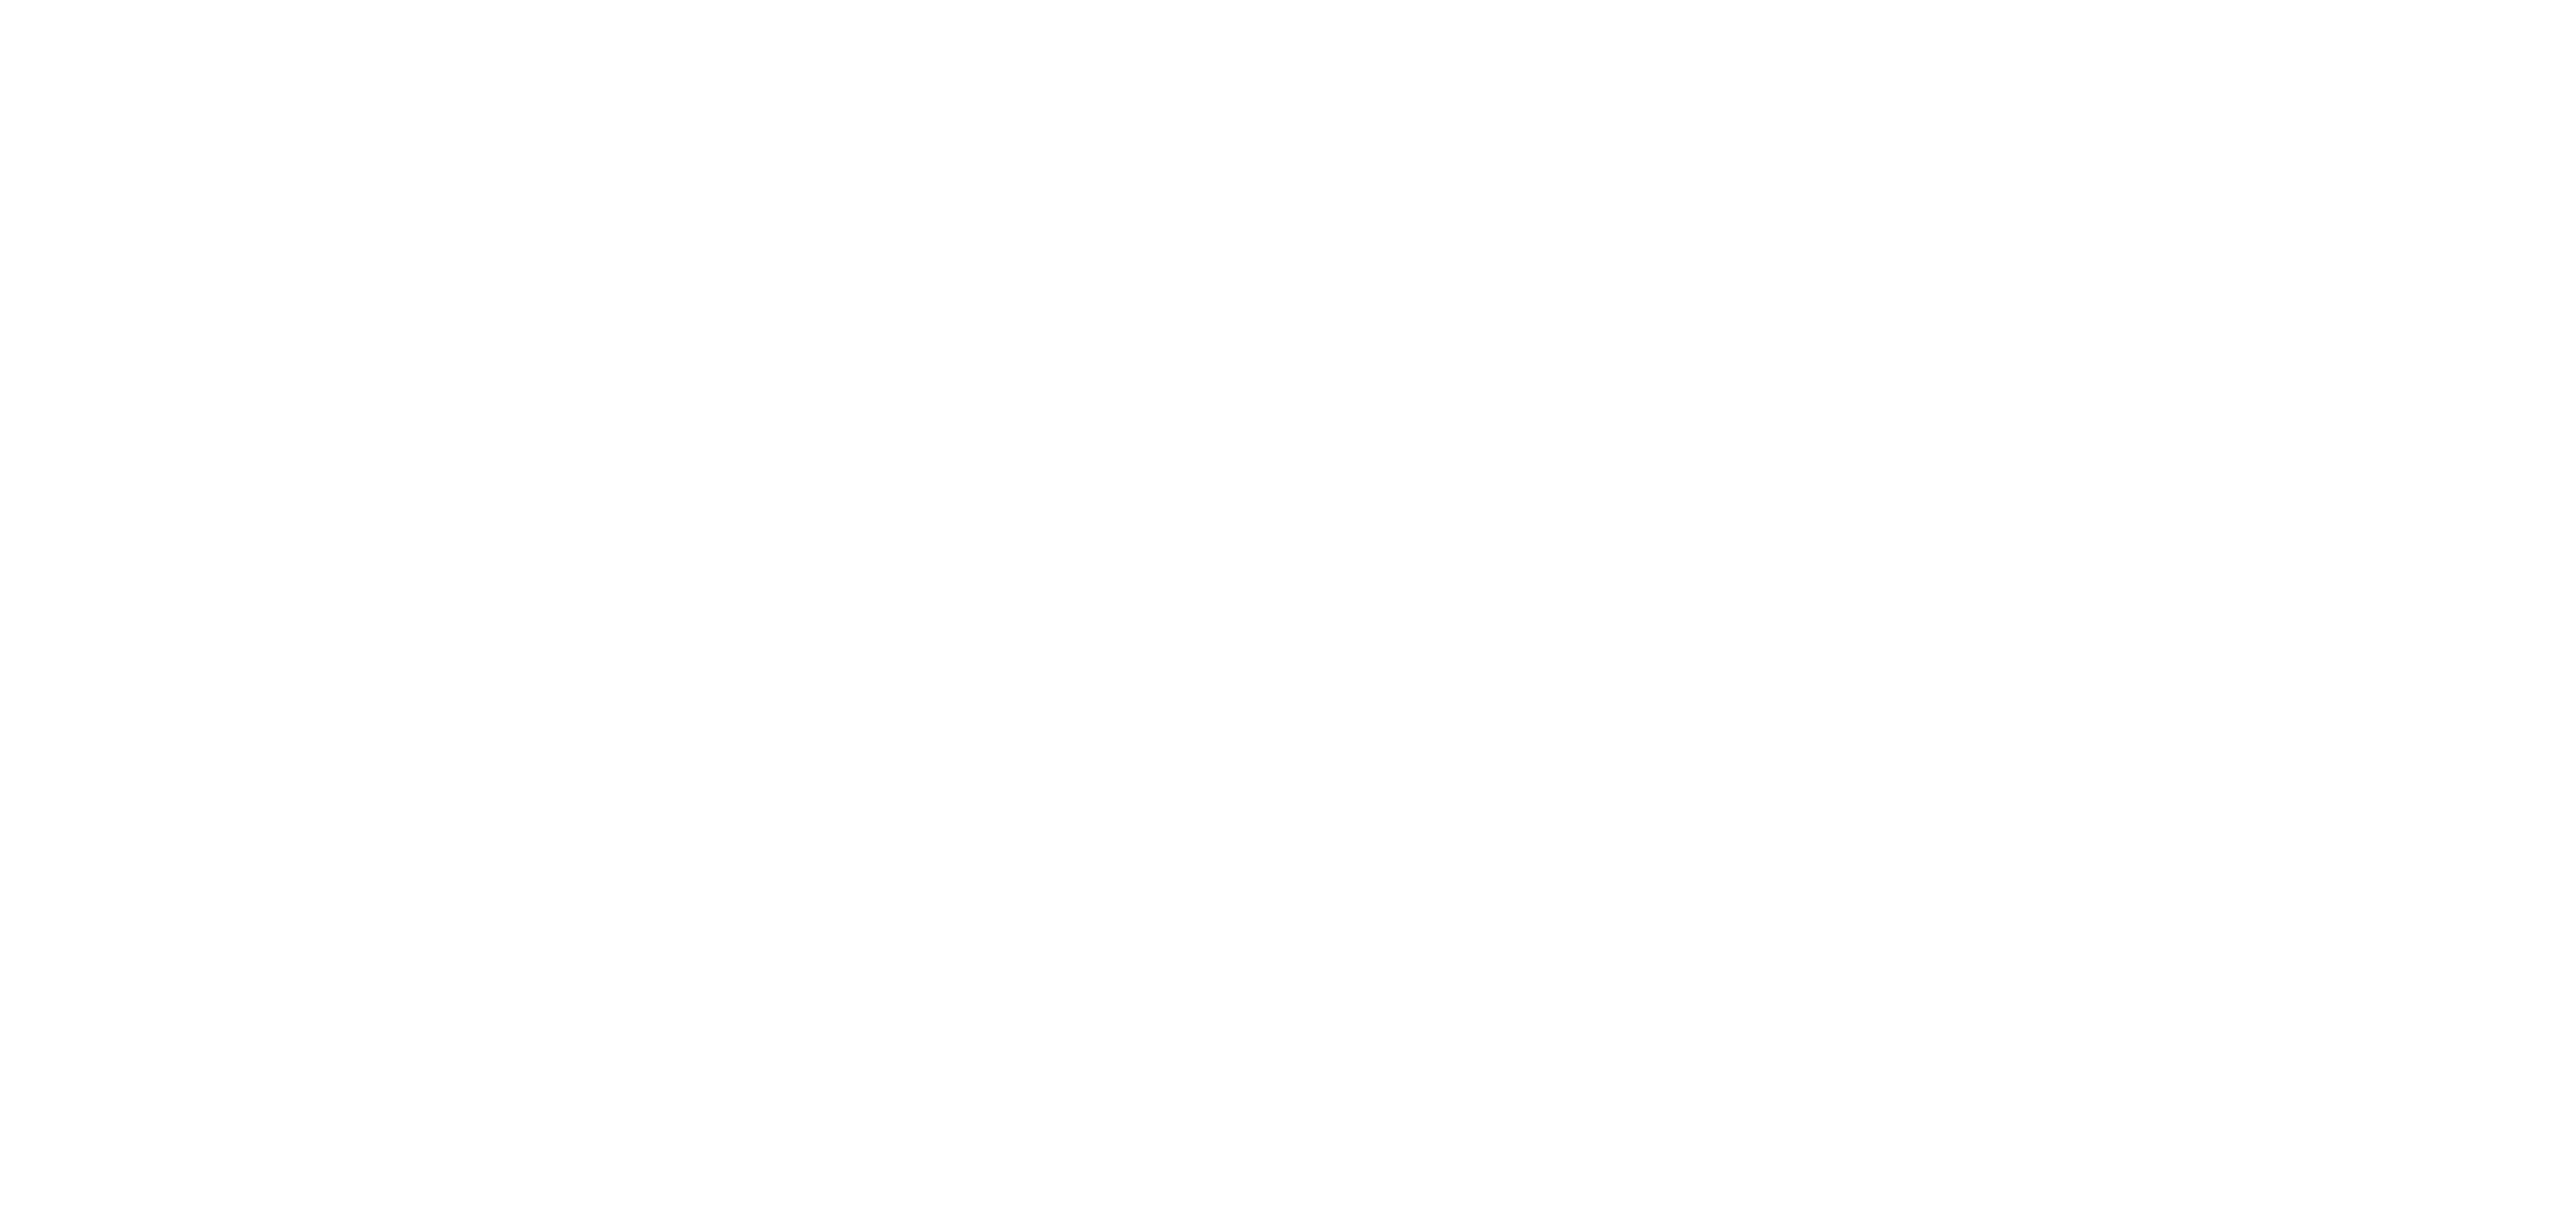 Miami Print Shop